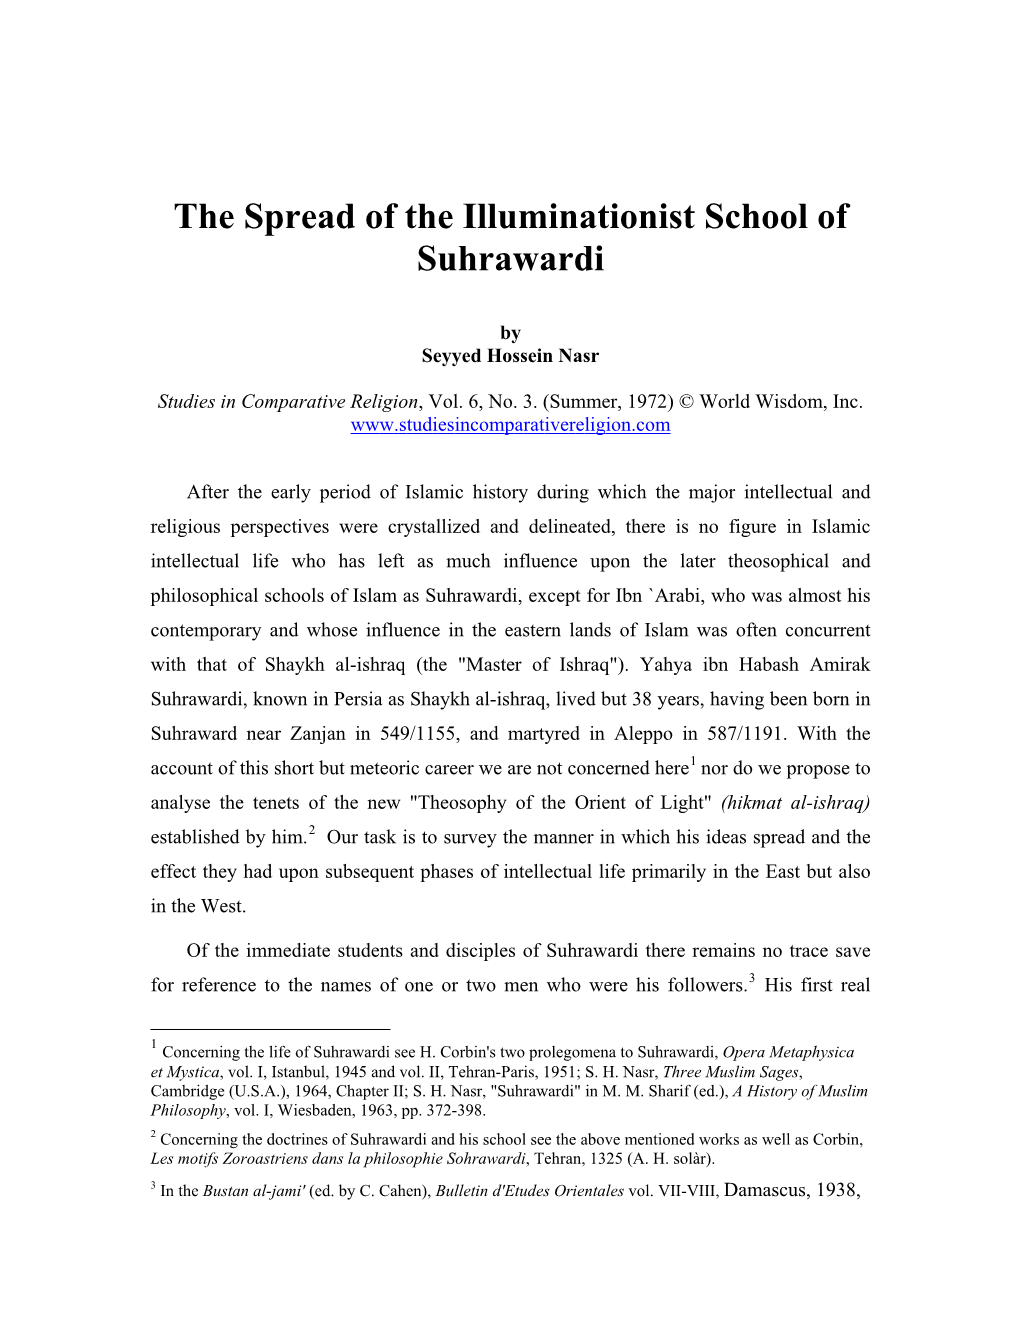 The Spread of the Illuminationist School of Suhrawardi